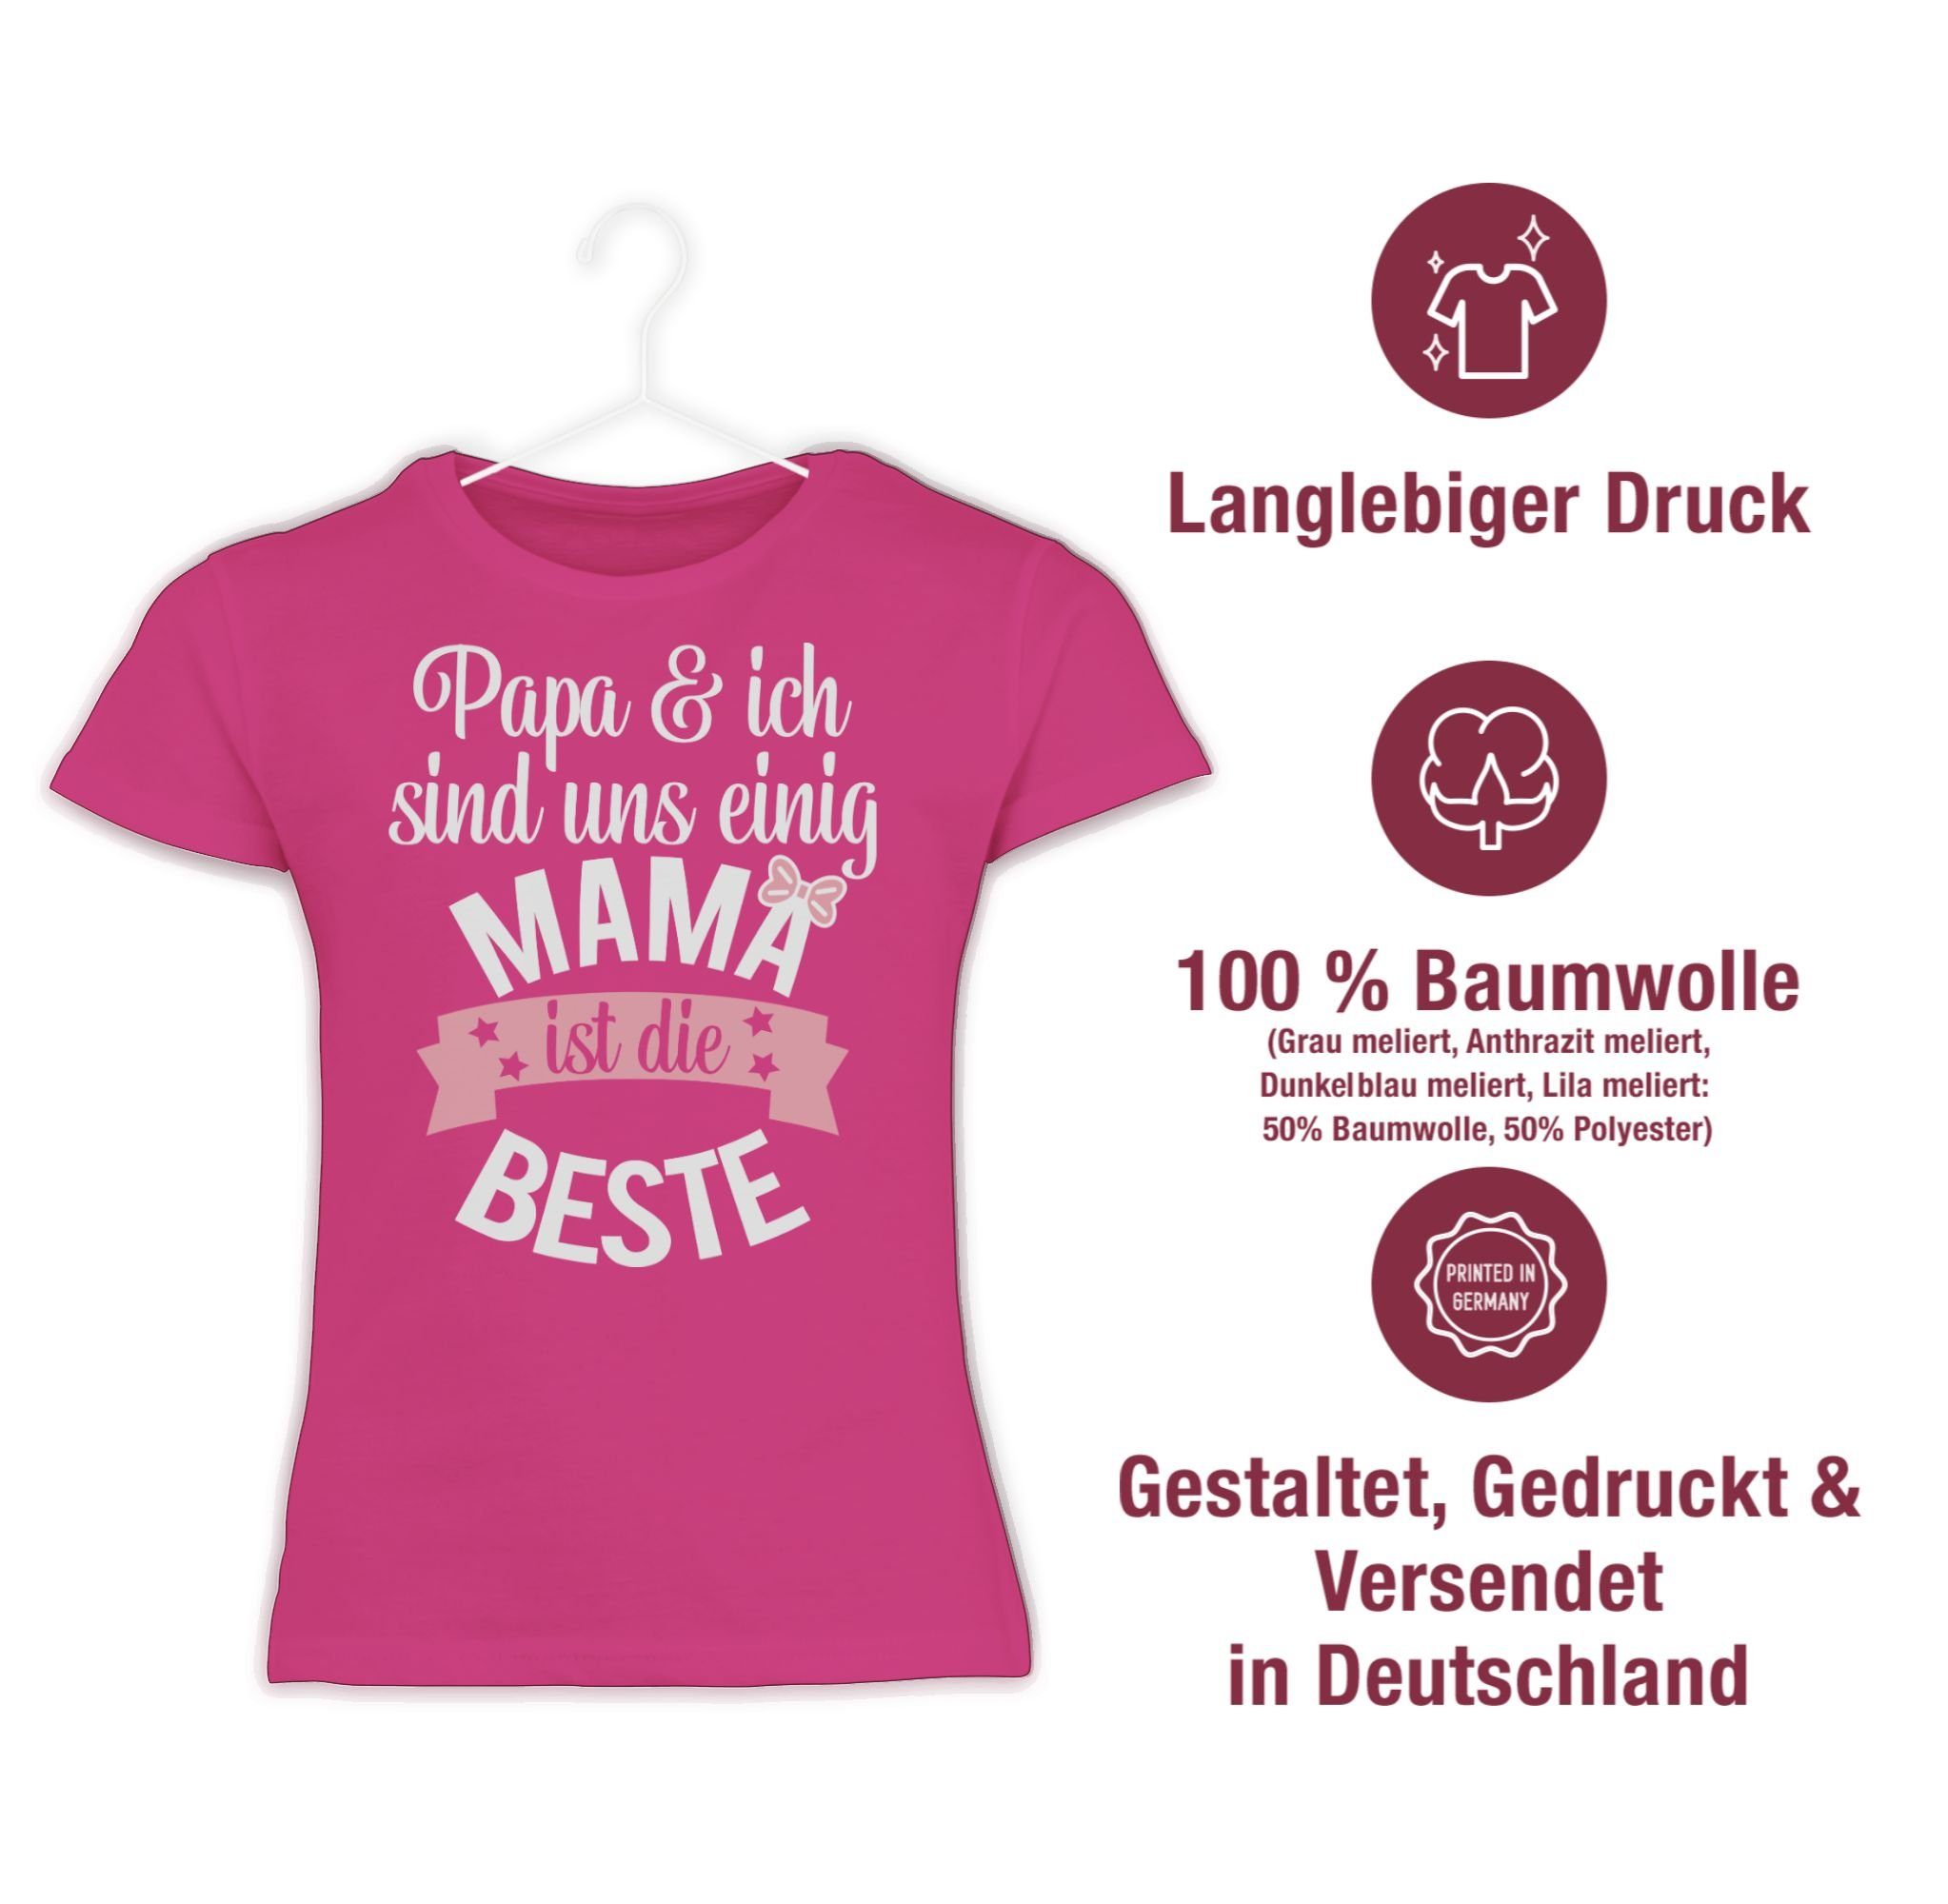 Shirtracer T-Shirt Mama ist Mutti 1 I die Weltbeste Fuchsia Muttertagsgeschenk beste